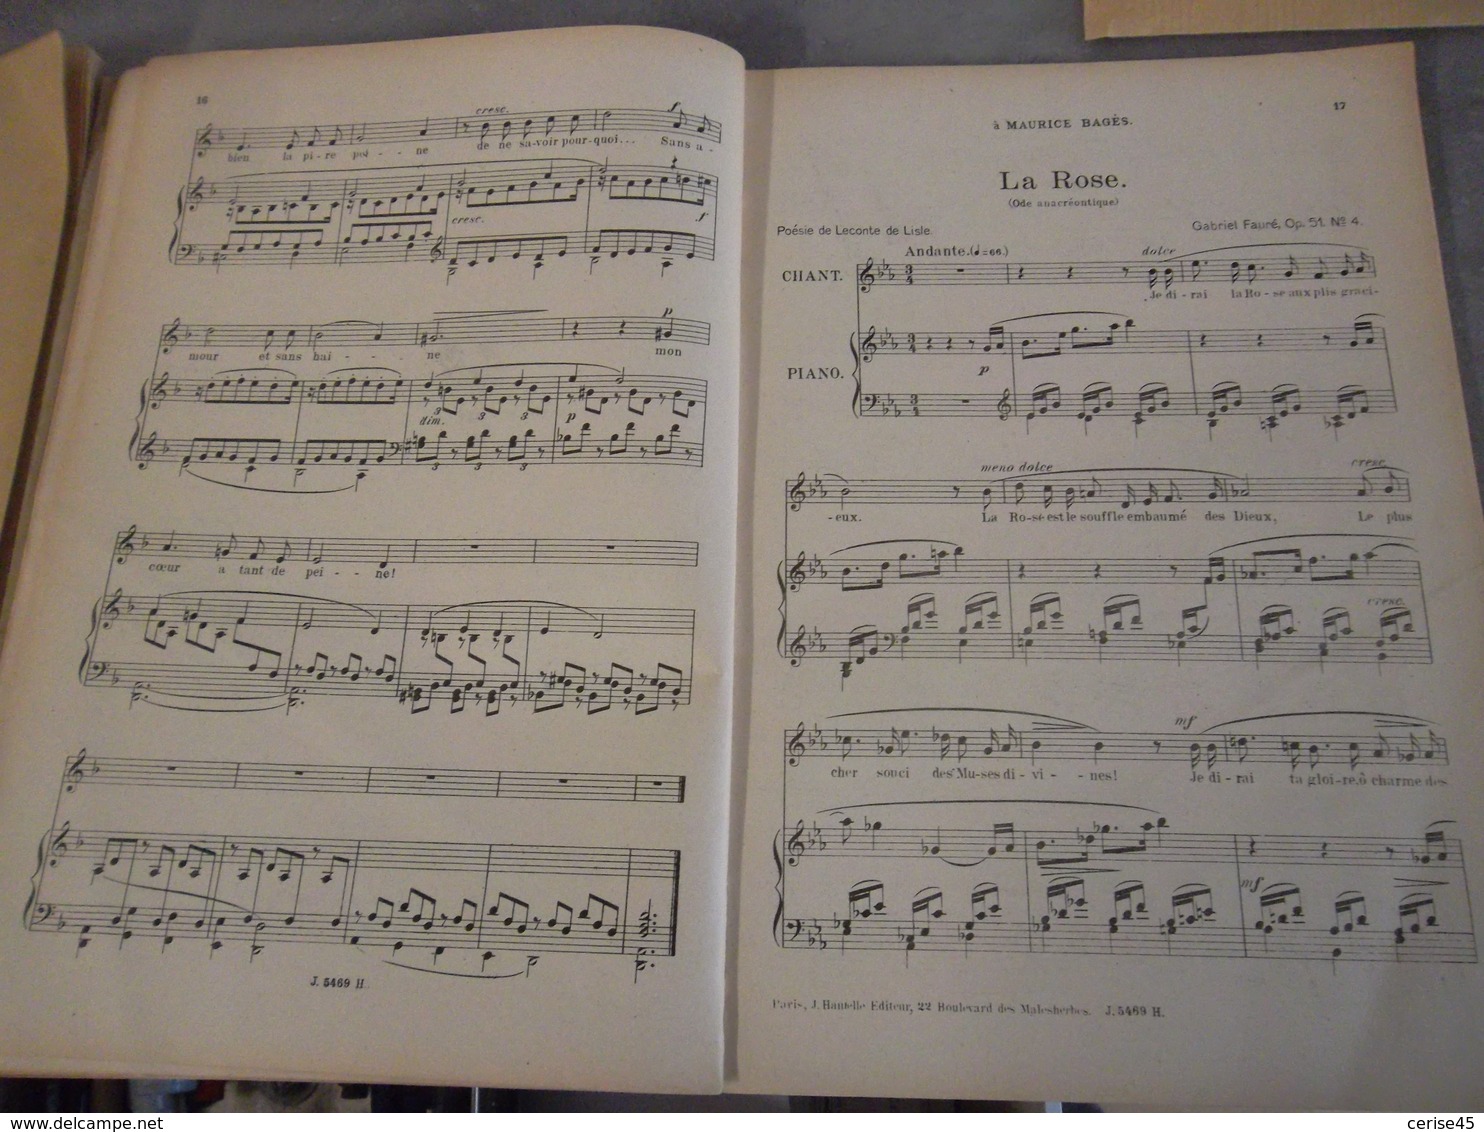 3 RECUEILS VINGT MELODIES  CHANT  PIANO  GABRIEL FAURE - Klavierinstrumenten